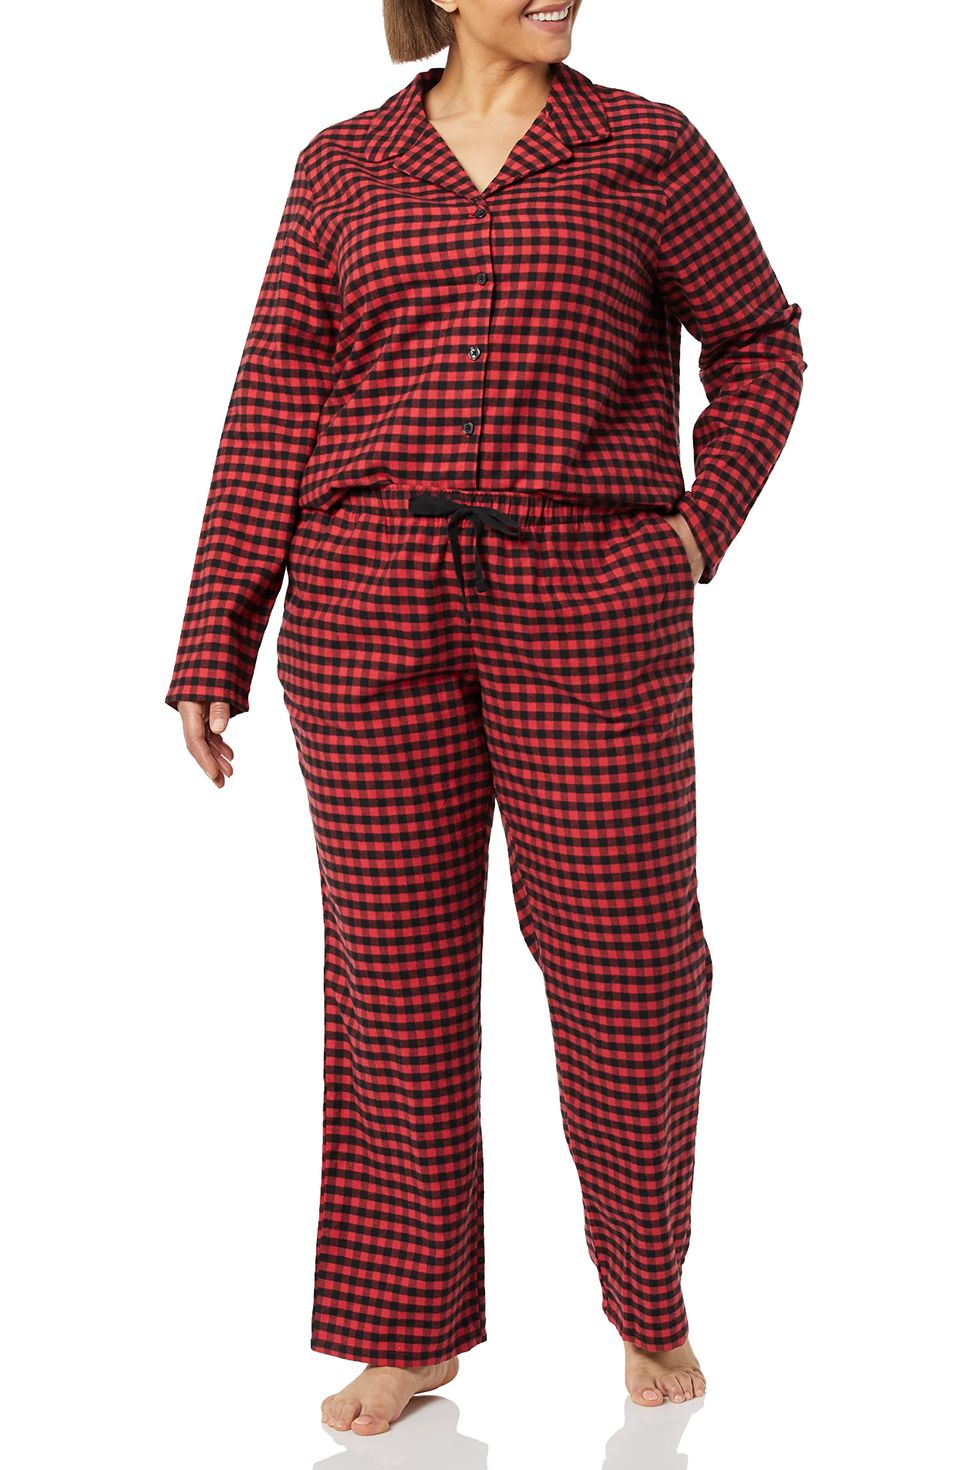 SMALL Heritage Plaid Black White VICTORIA'S SECRET Flannel Long Pajama Set  NEW